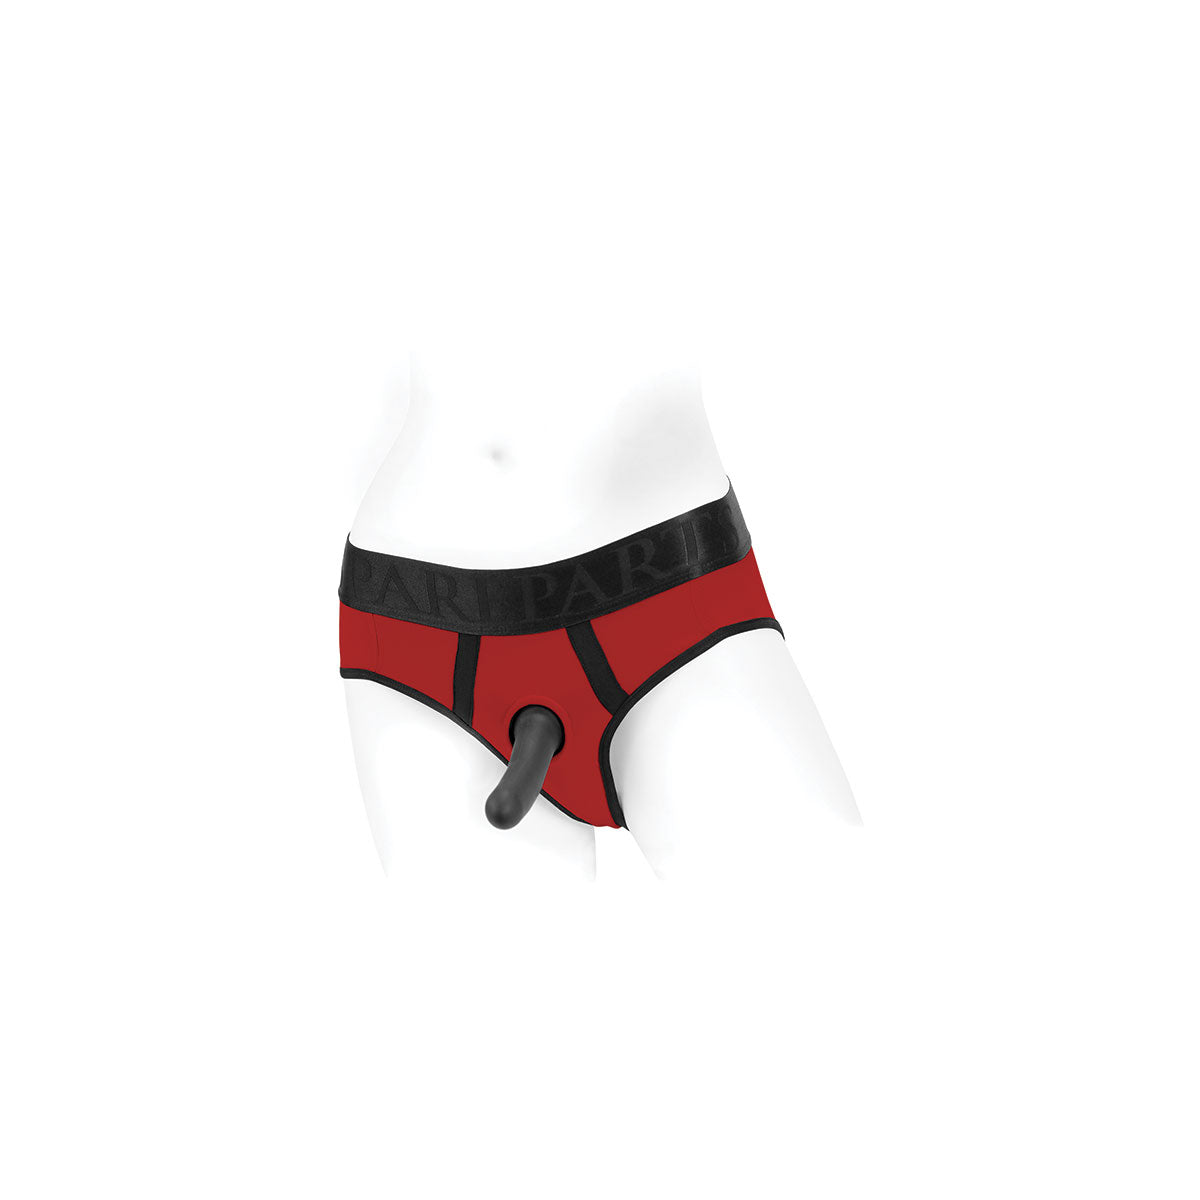 SpareParts Tomboi Harness Red-Black Nylon - XXS Intimates Adult Boutique